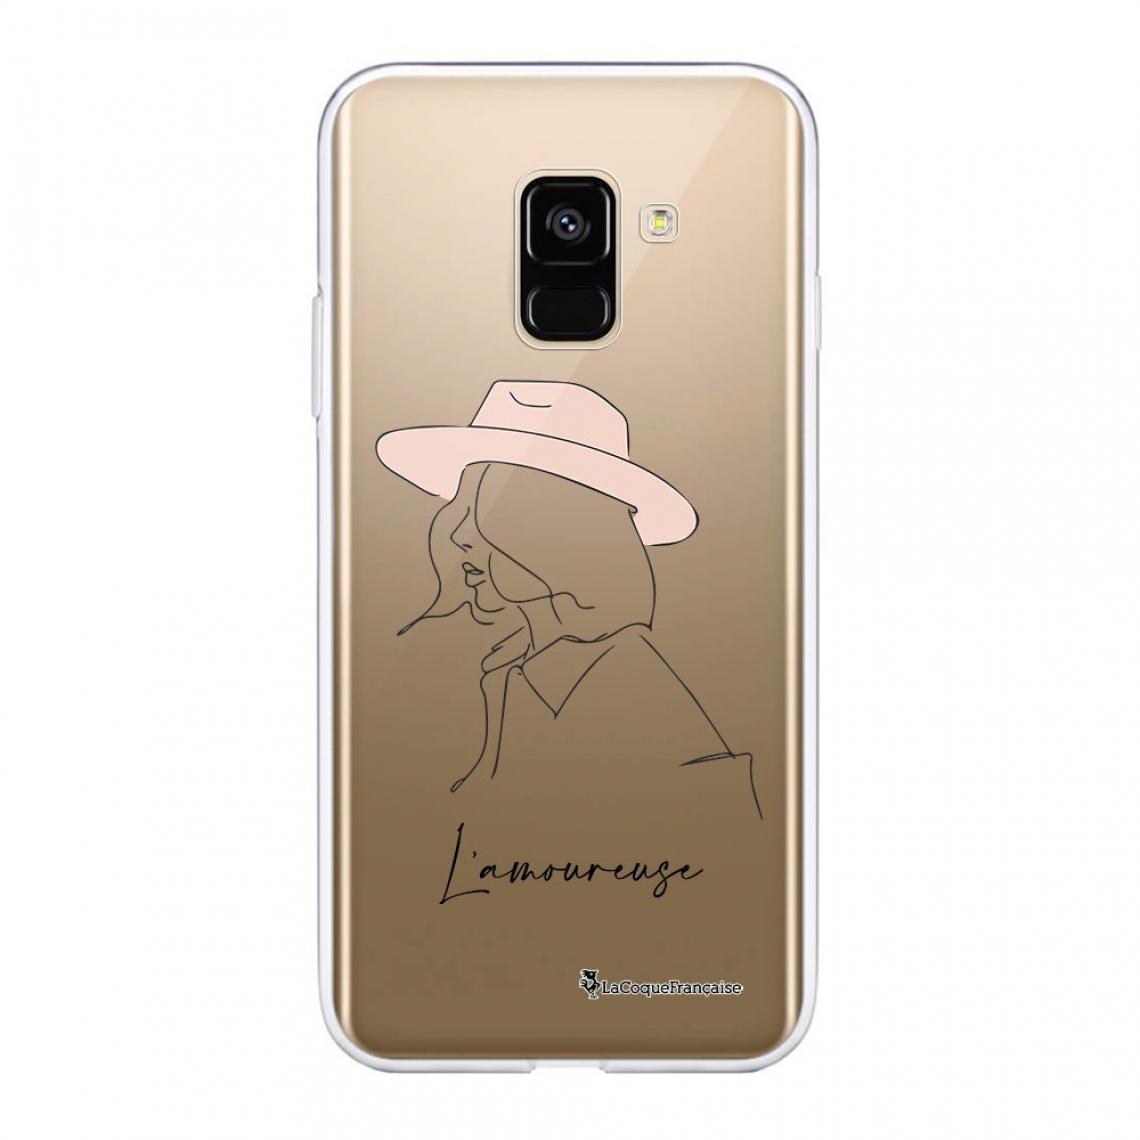 La Coque Francaise - Coque Samsung Galaxy A8 2018 souple silicone transparente - Coque, étui smartphone